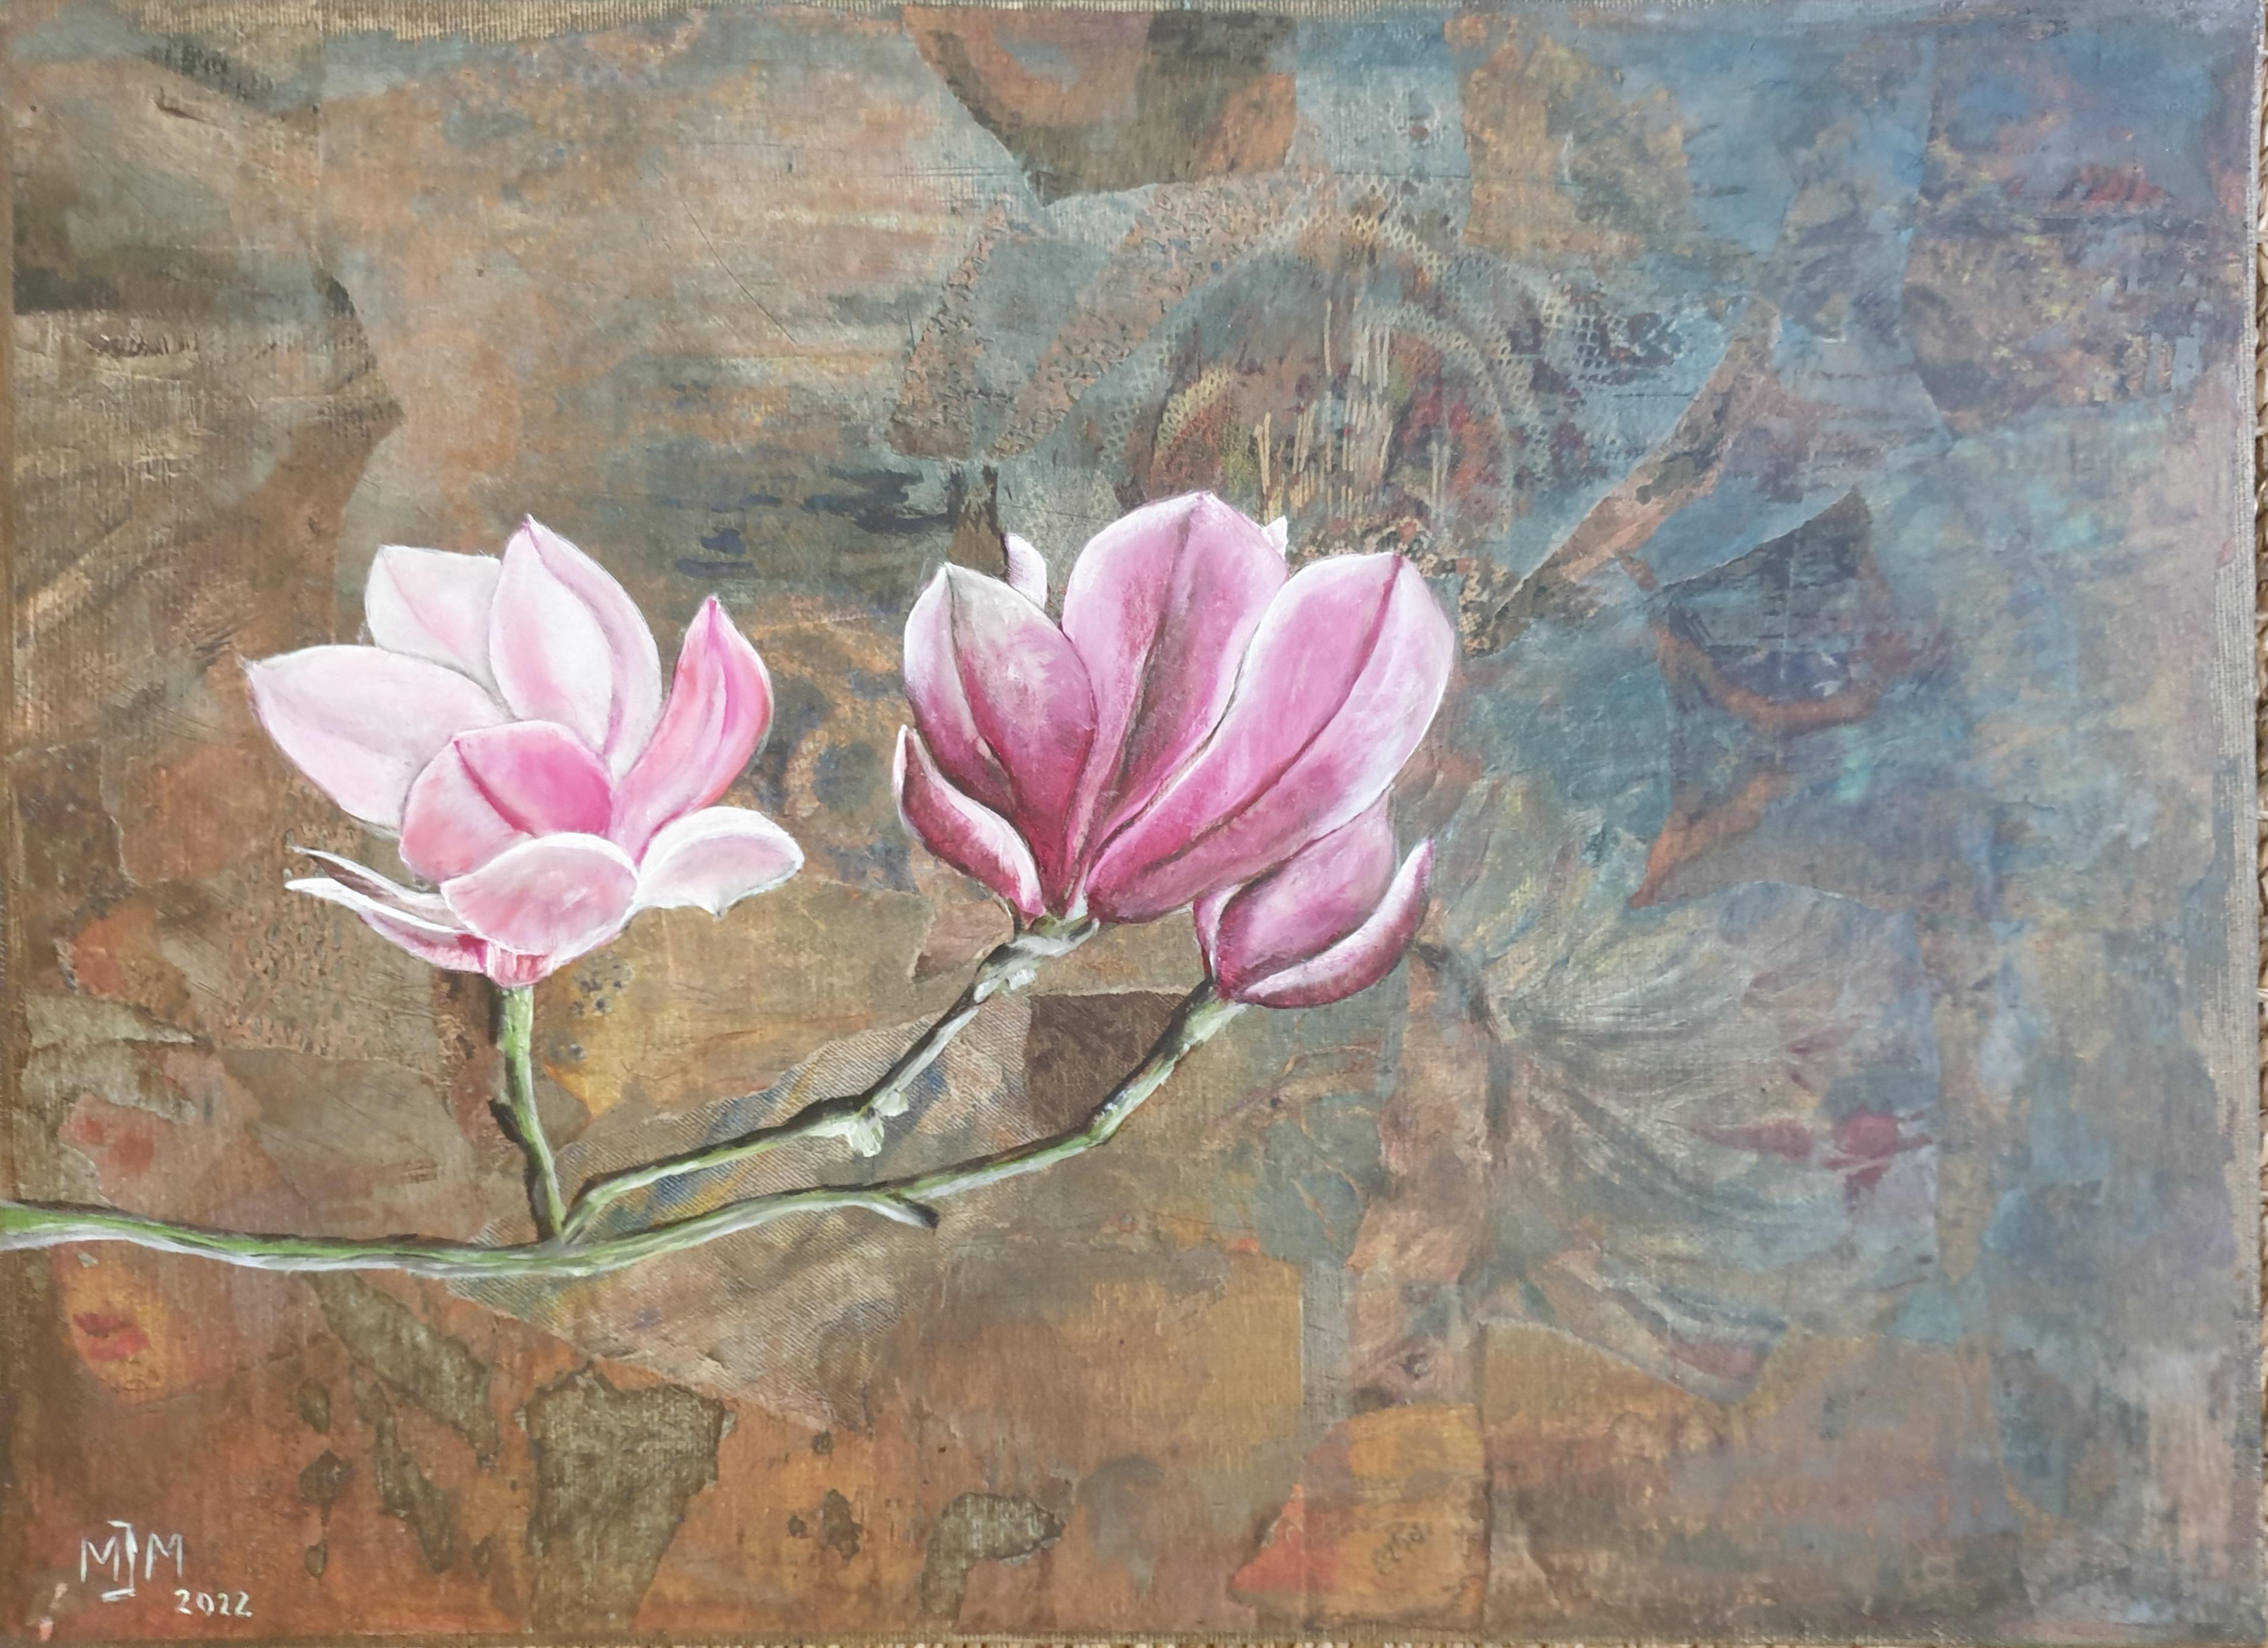 Magnolia. Contemporary Botanical Oil, Acrylic and Mixed-media on Board. - Mixed Media Art by Menno Modderman 